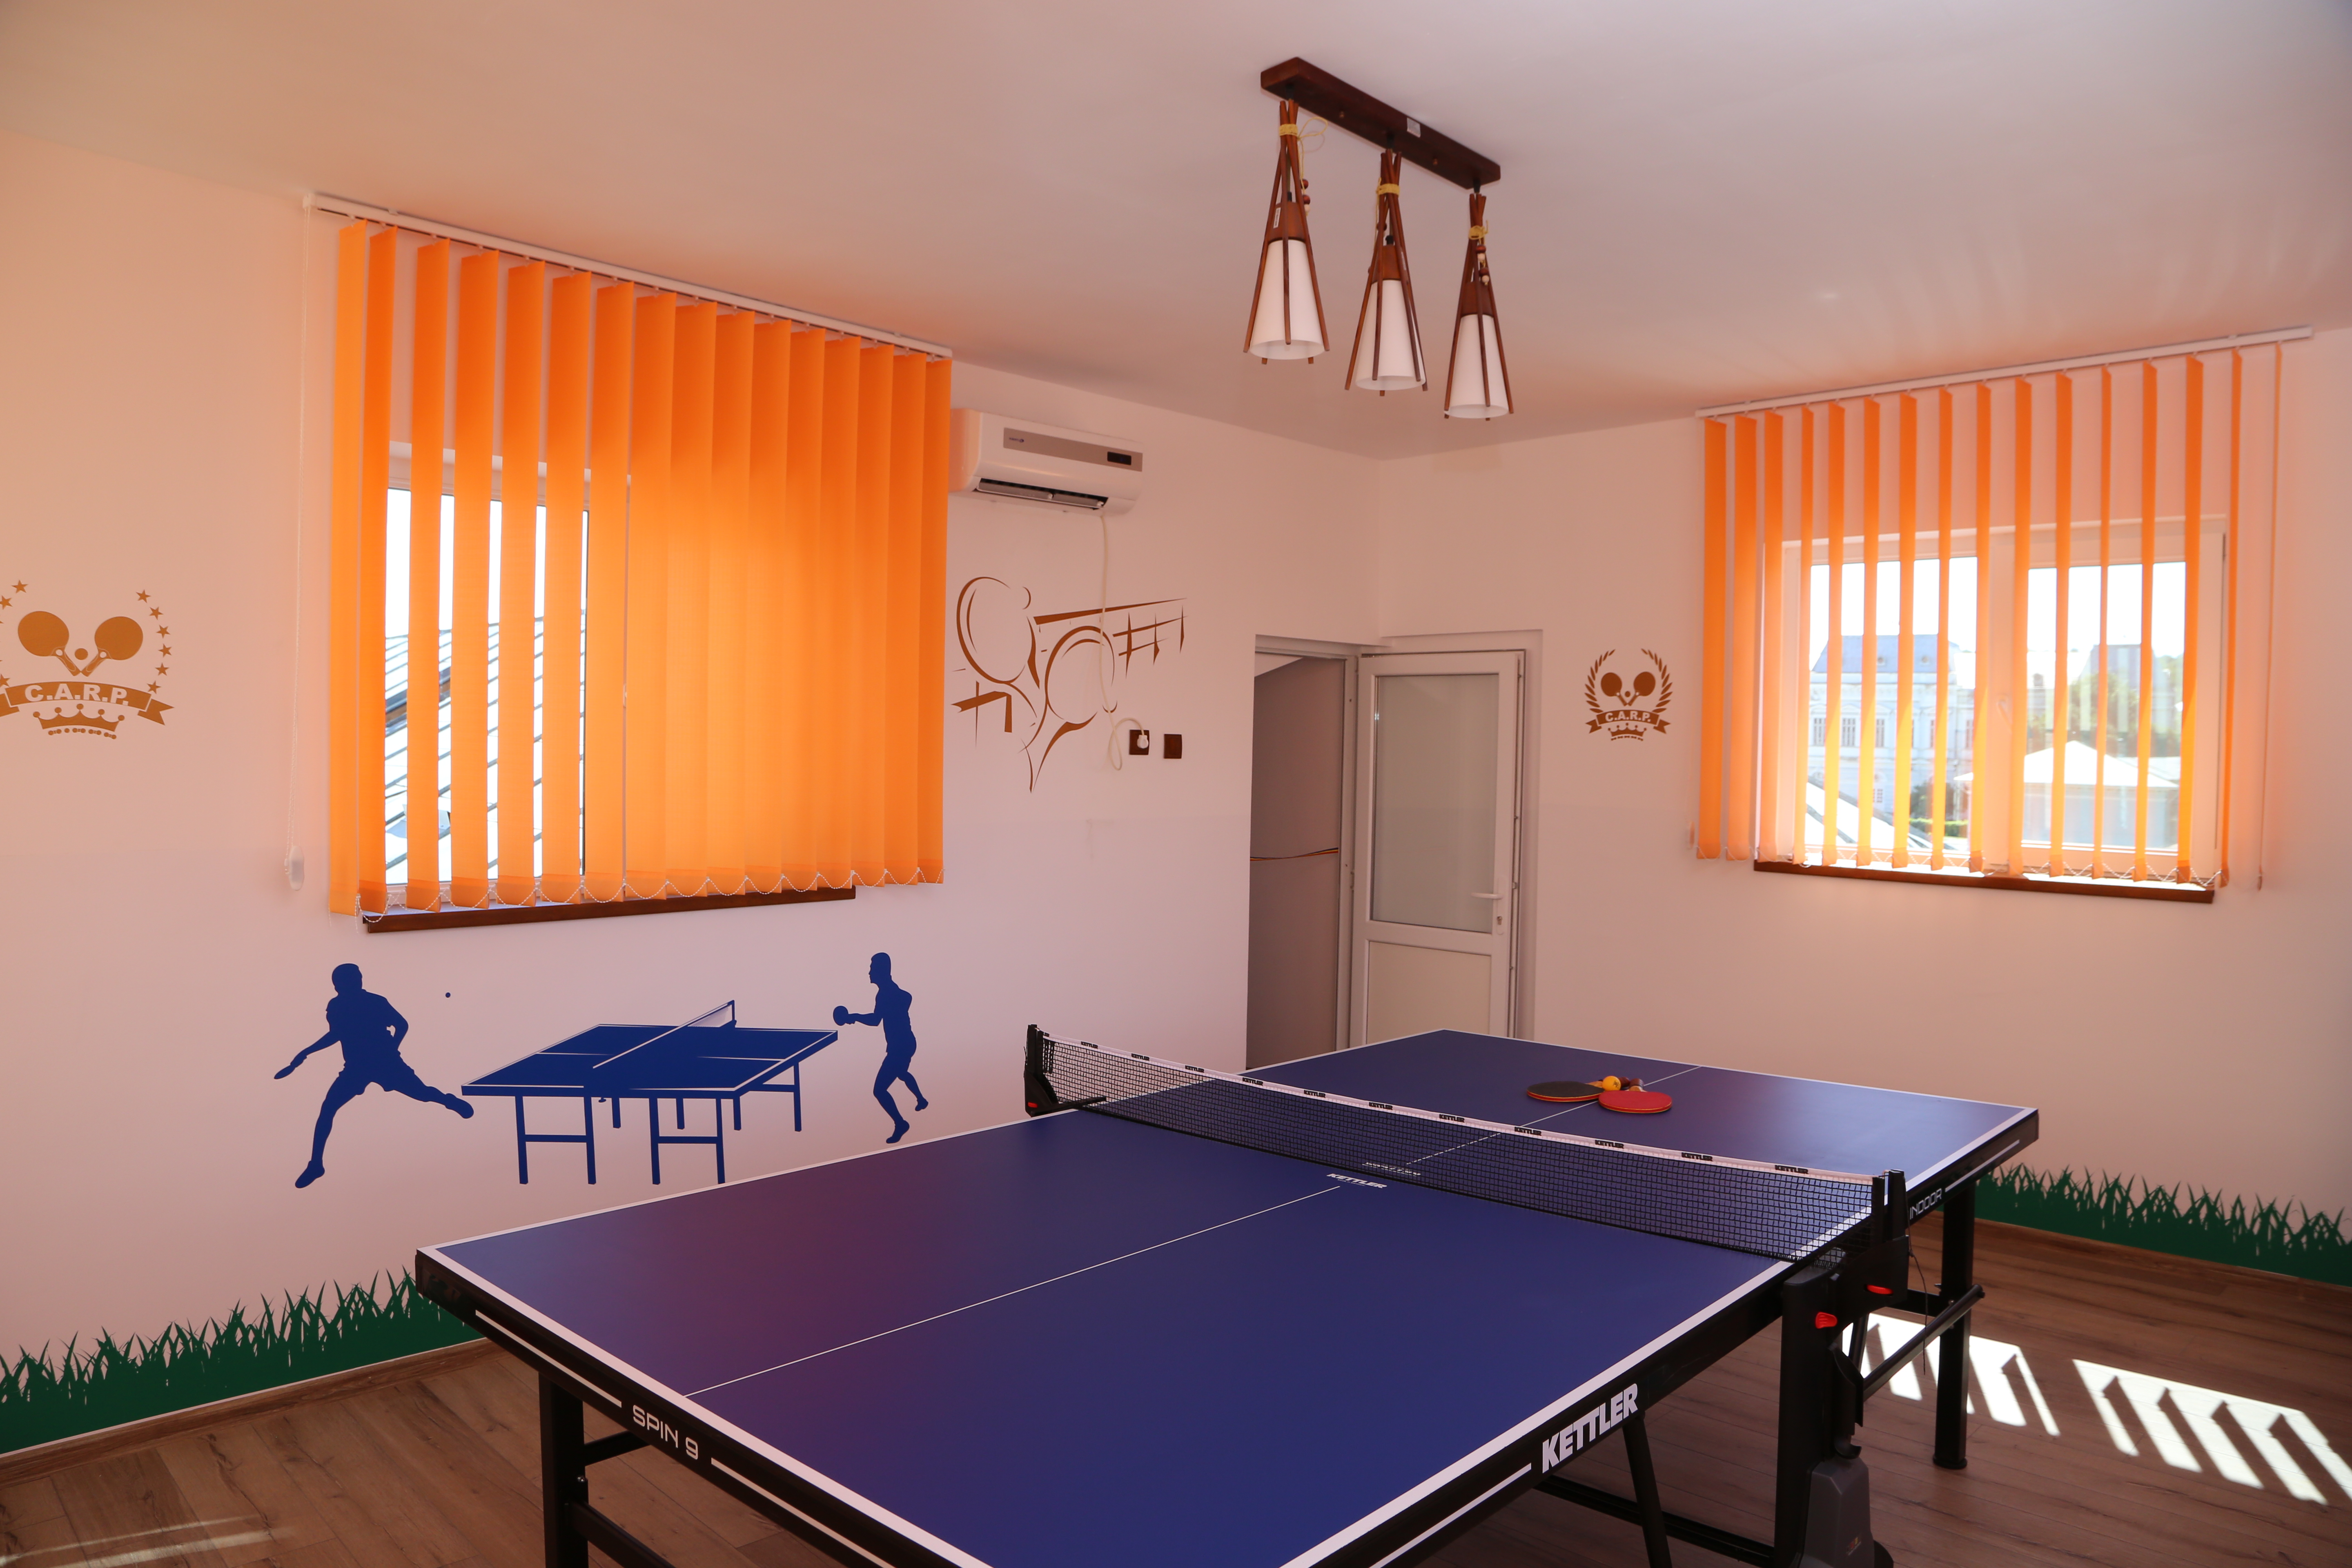 Sala de ping-pong